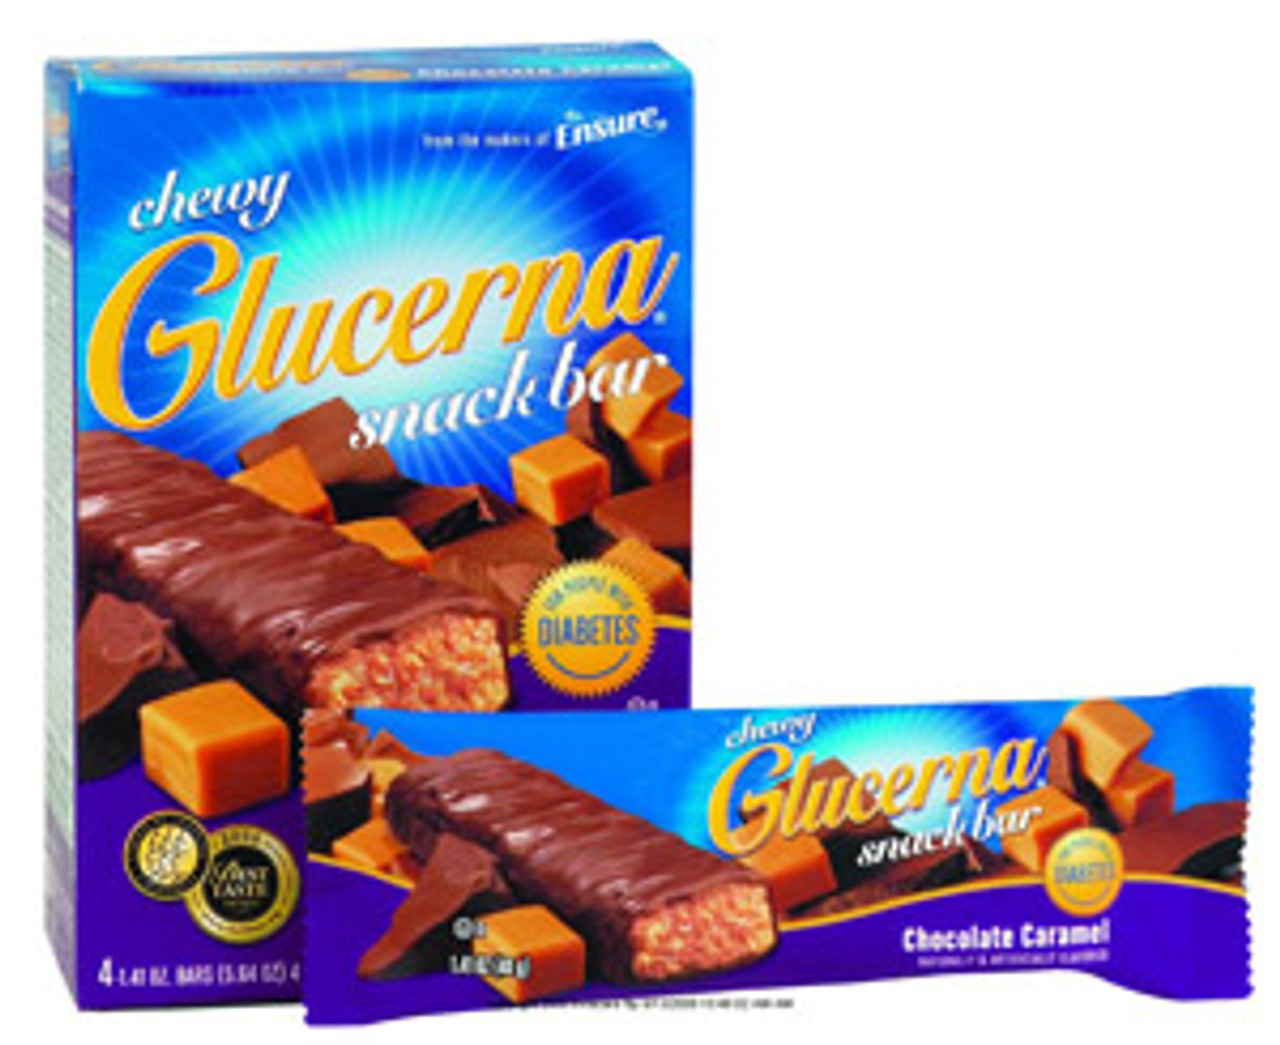 Glucerna® Snack Bar ROS57969CS